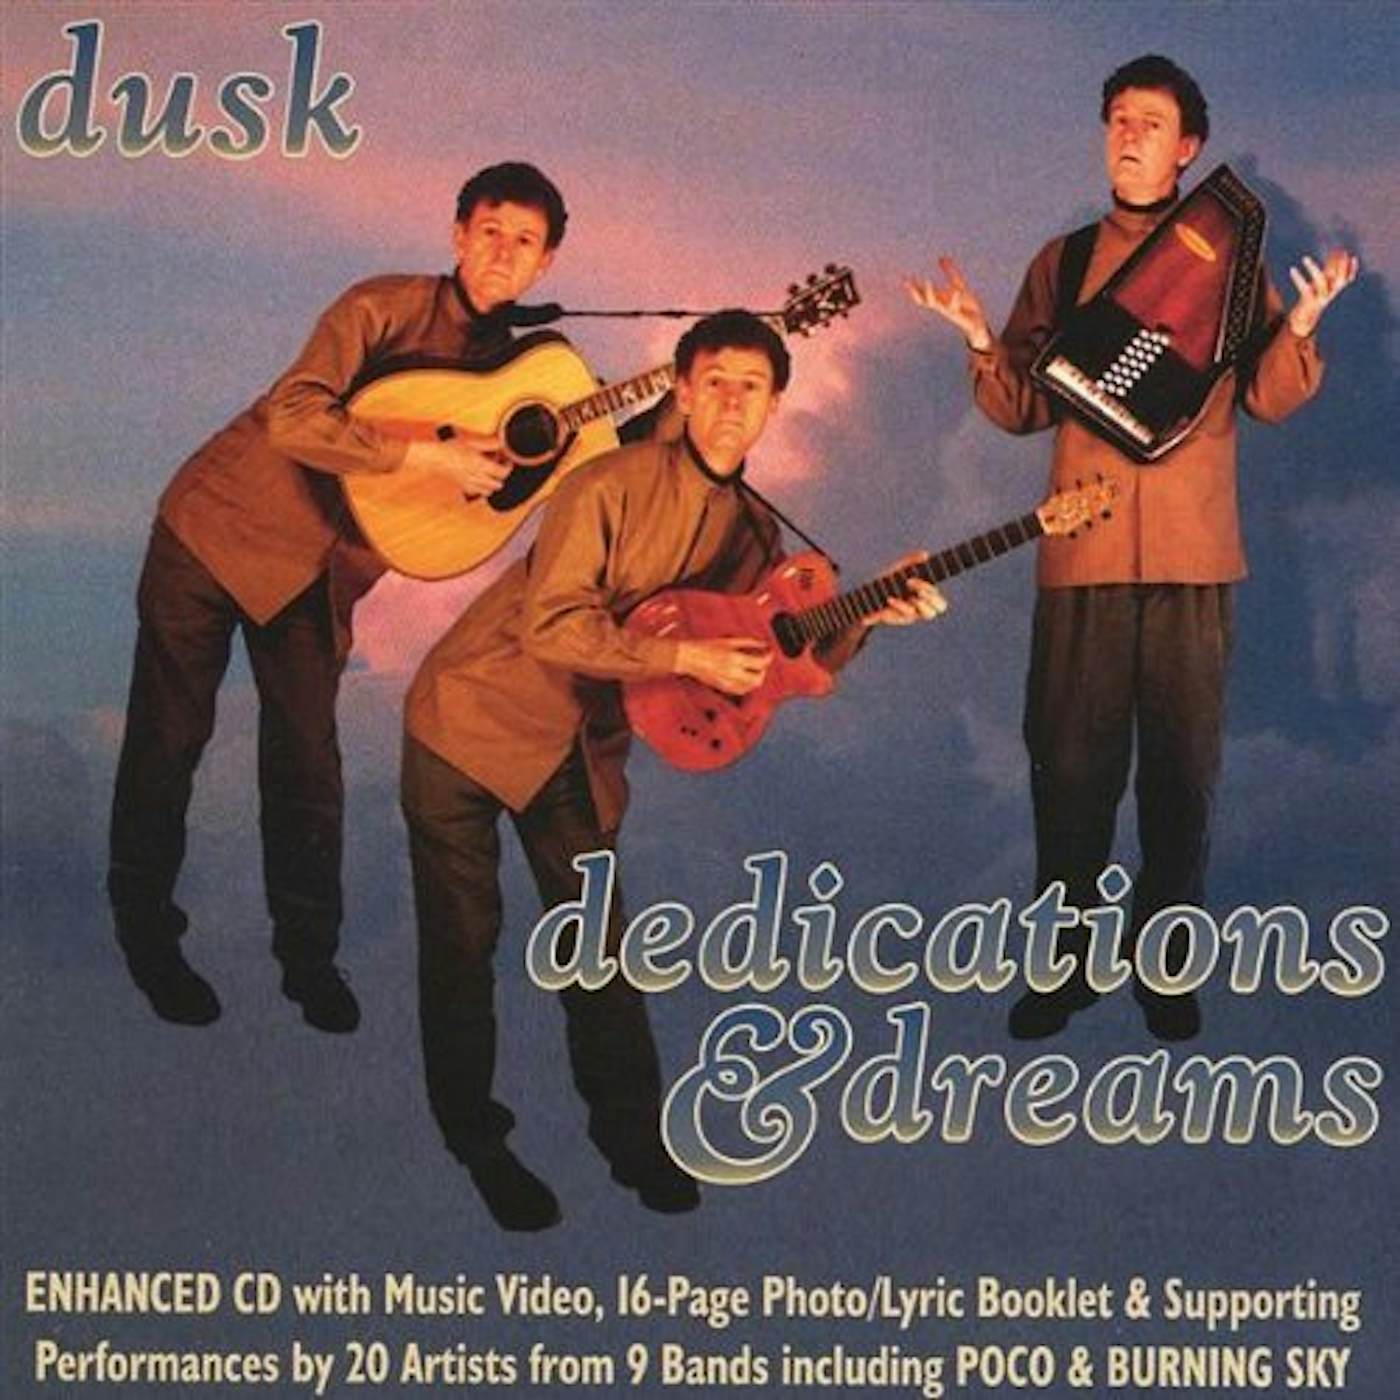 Dusk DEDICATIONS & DREAMS CD